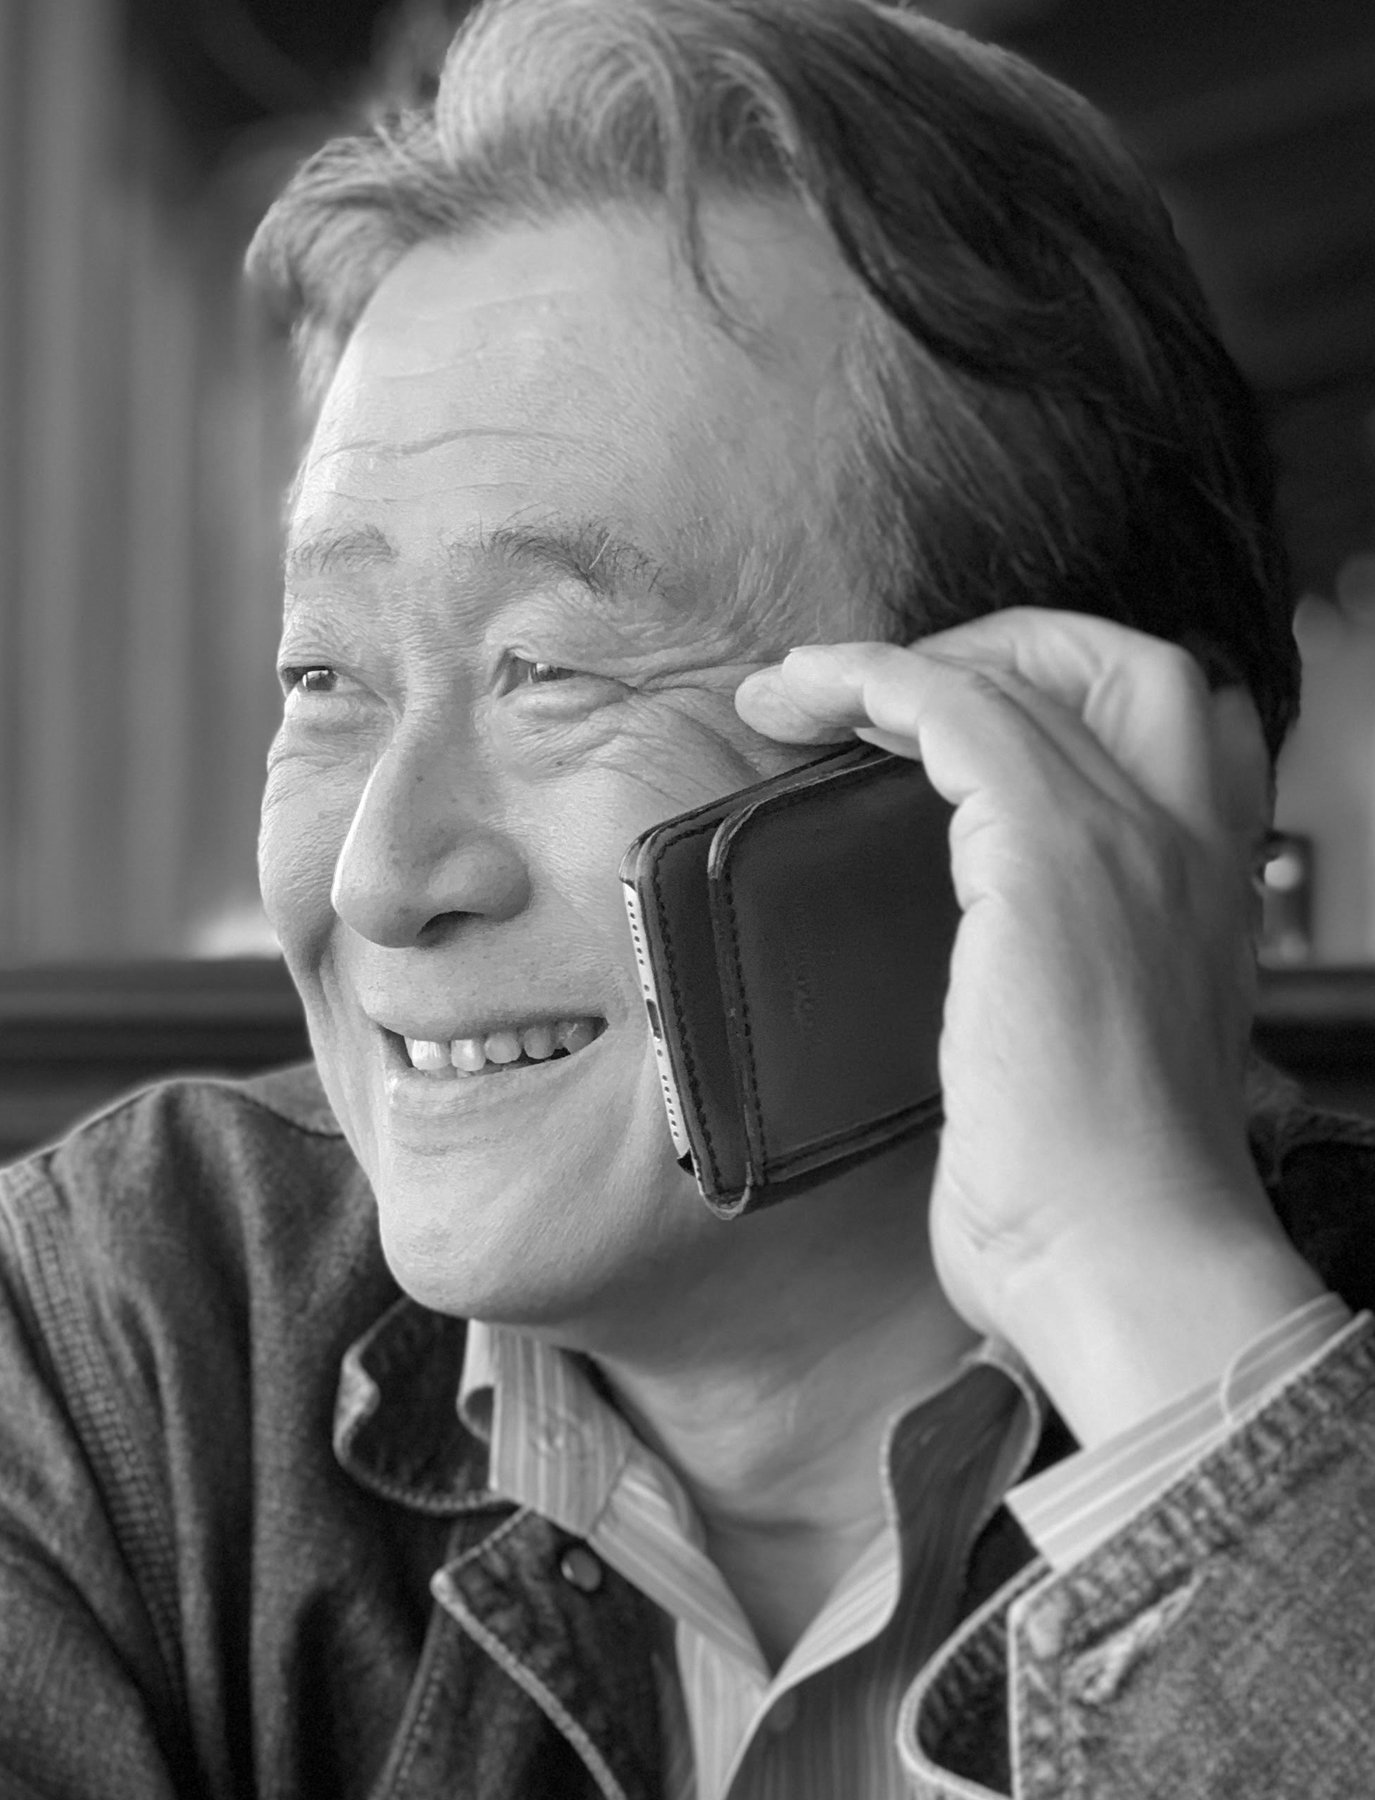 Hiroshi Kagawa